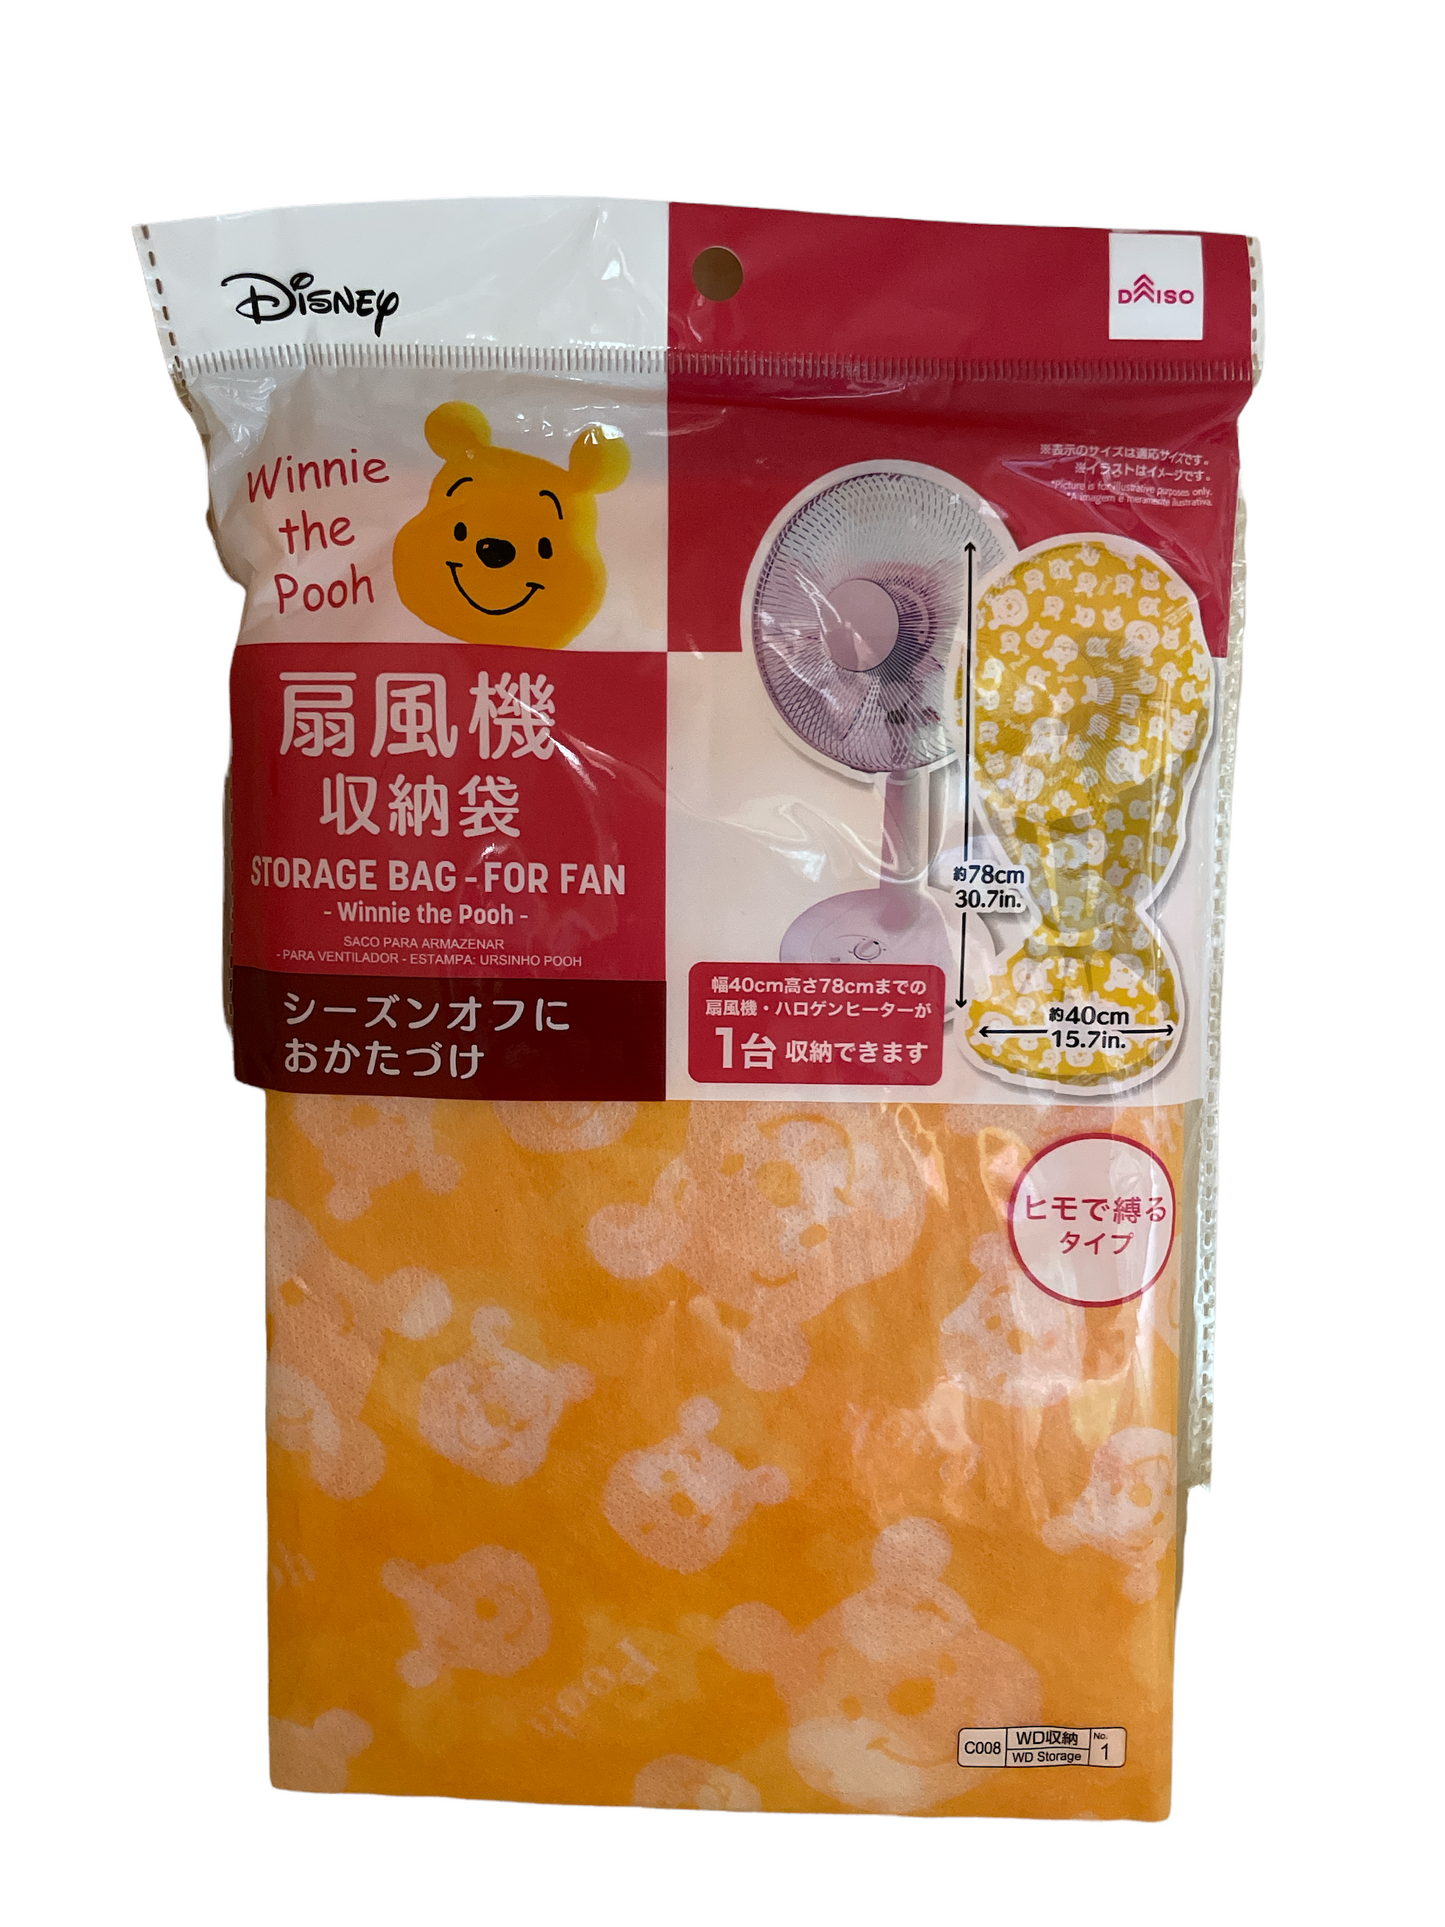 Storage Bag - for Fan (Winnie the Pooh)